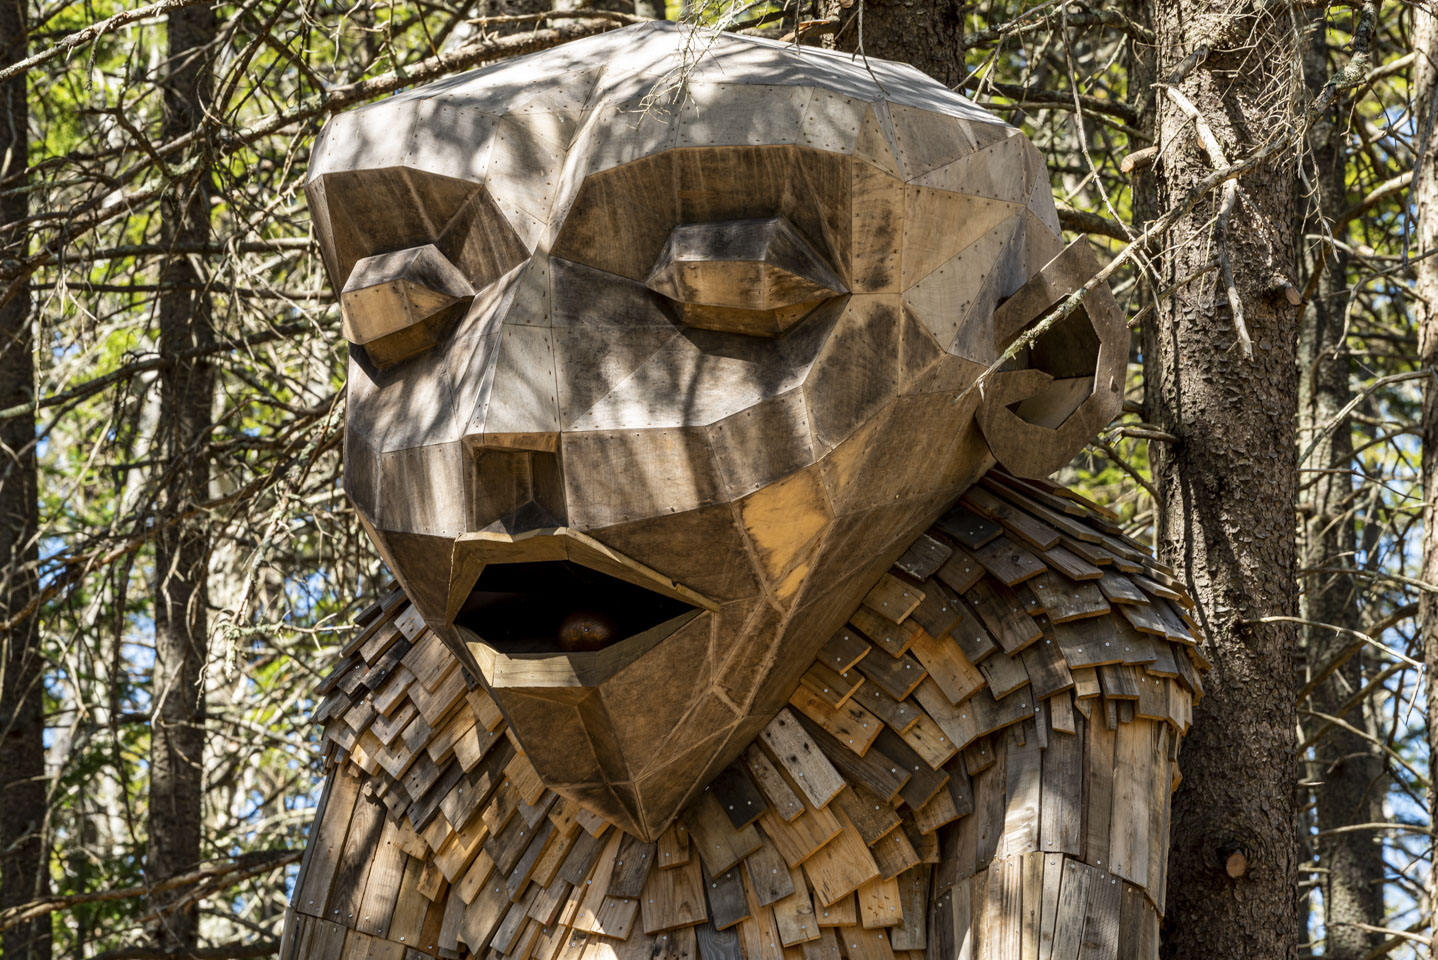 The troll sculpture Gro